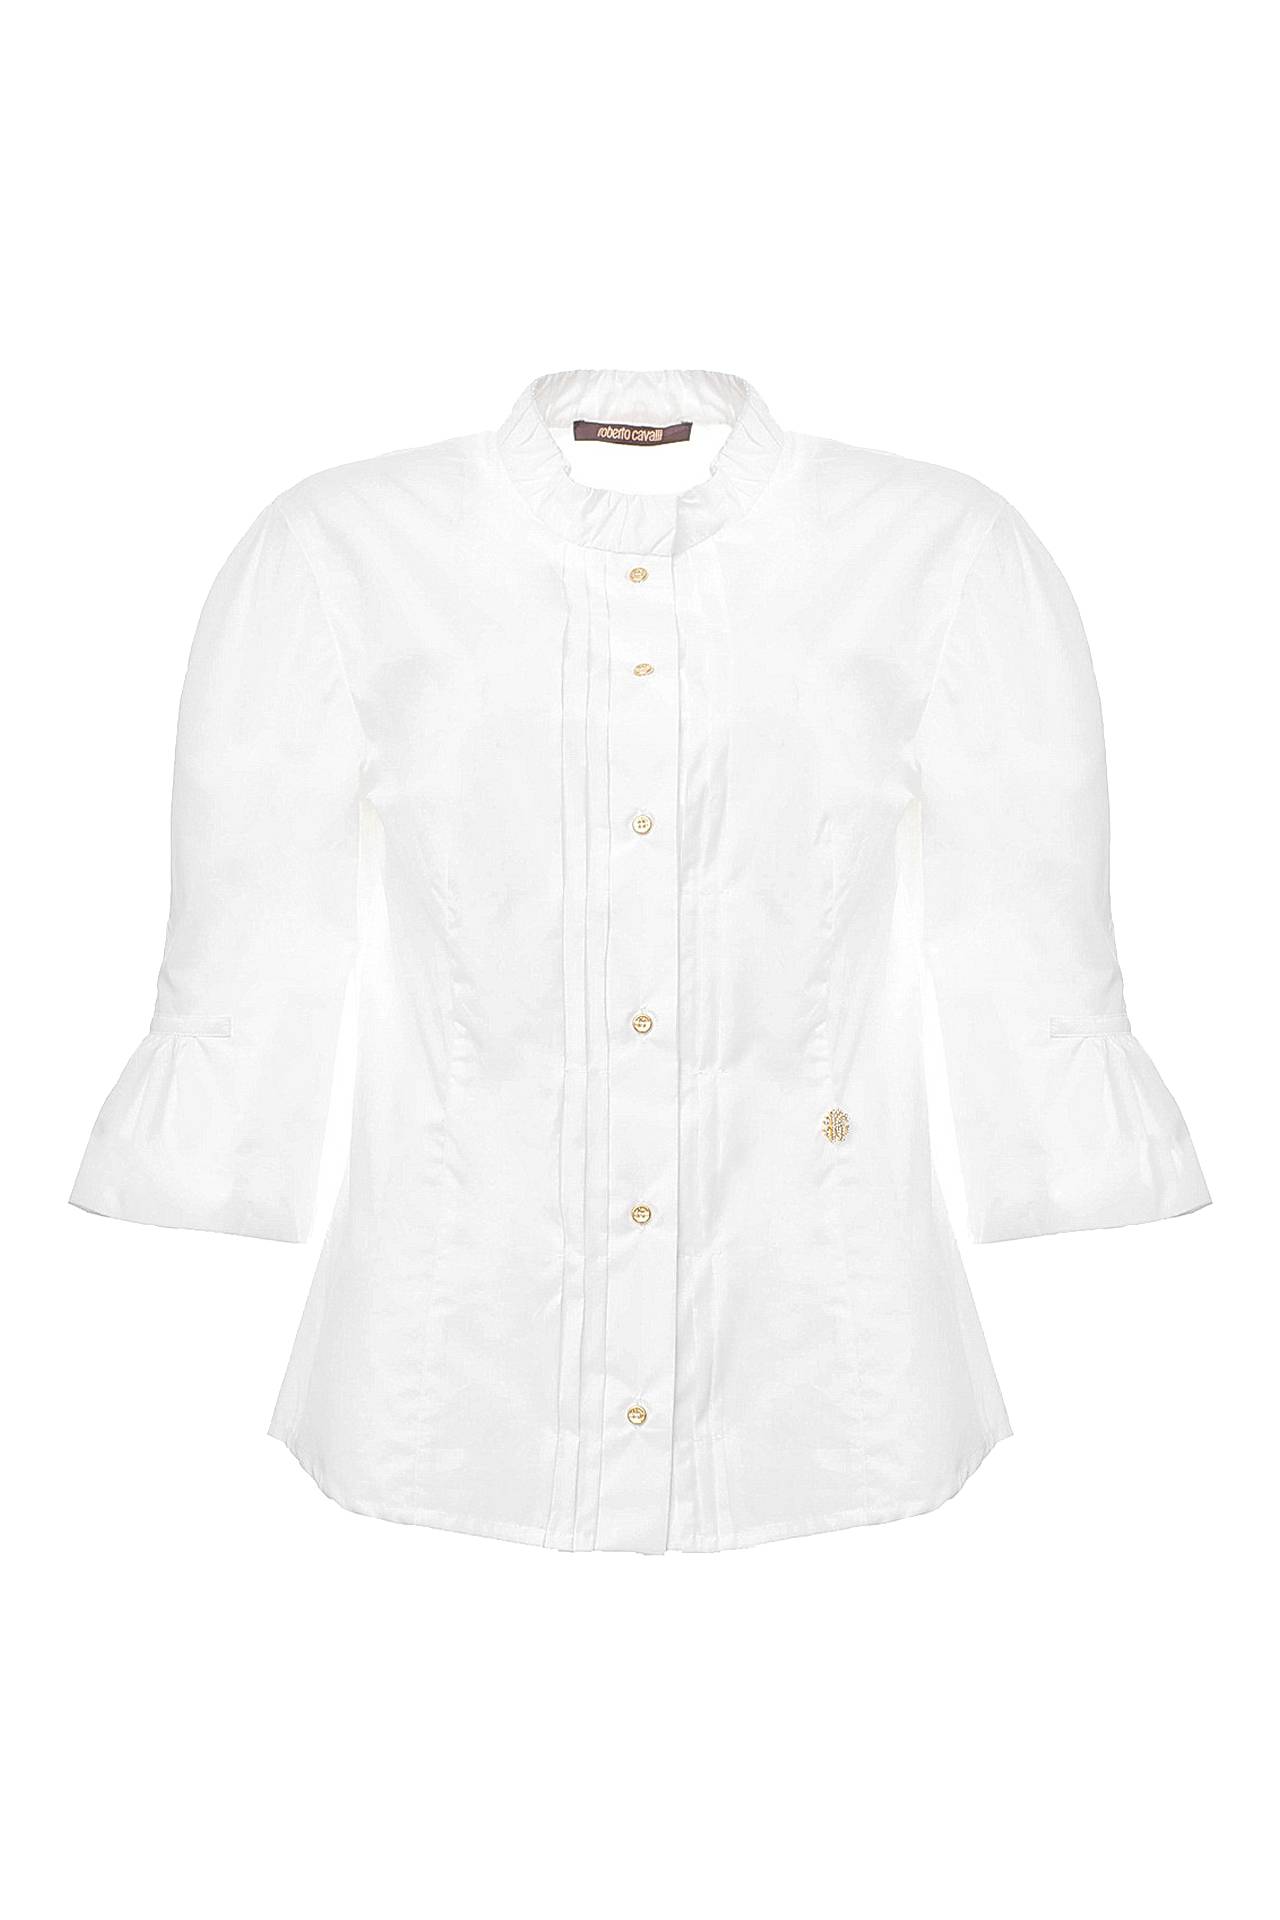 Одежда женская Рубашка ROBERTO CAVALLI (LPT716CH006/19). Купить за 9870 руб.